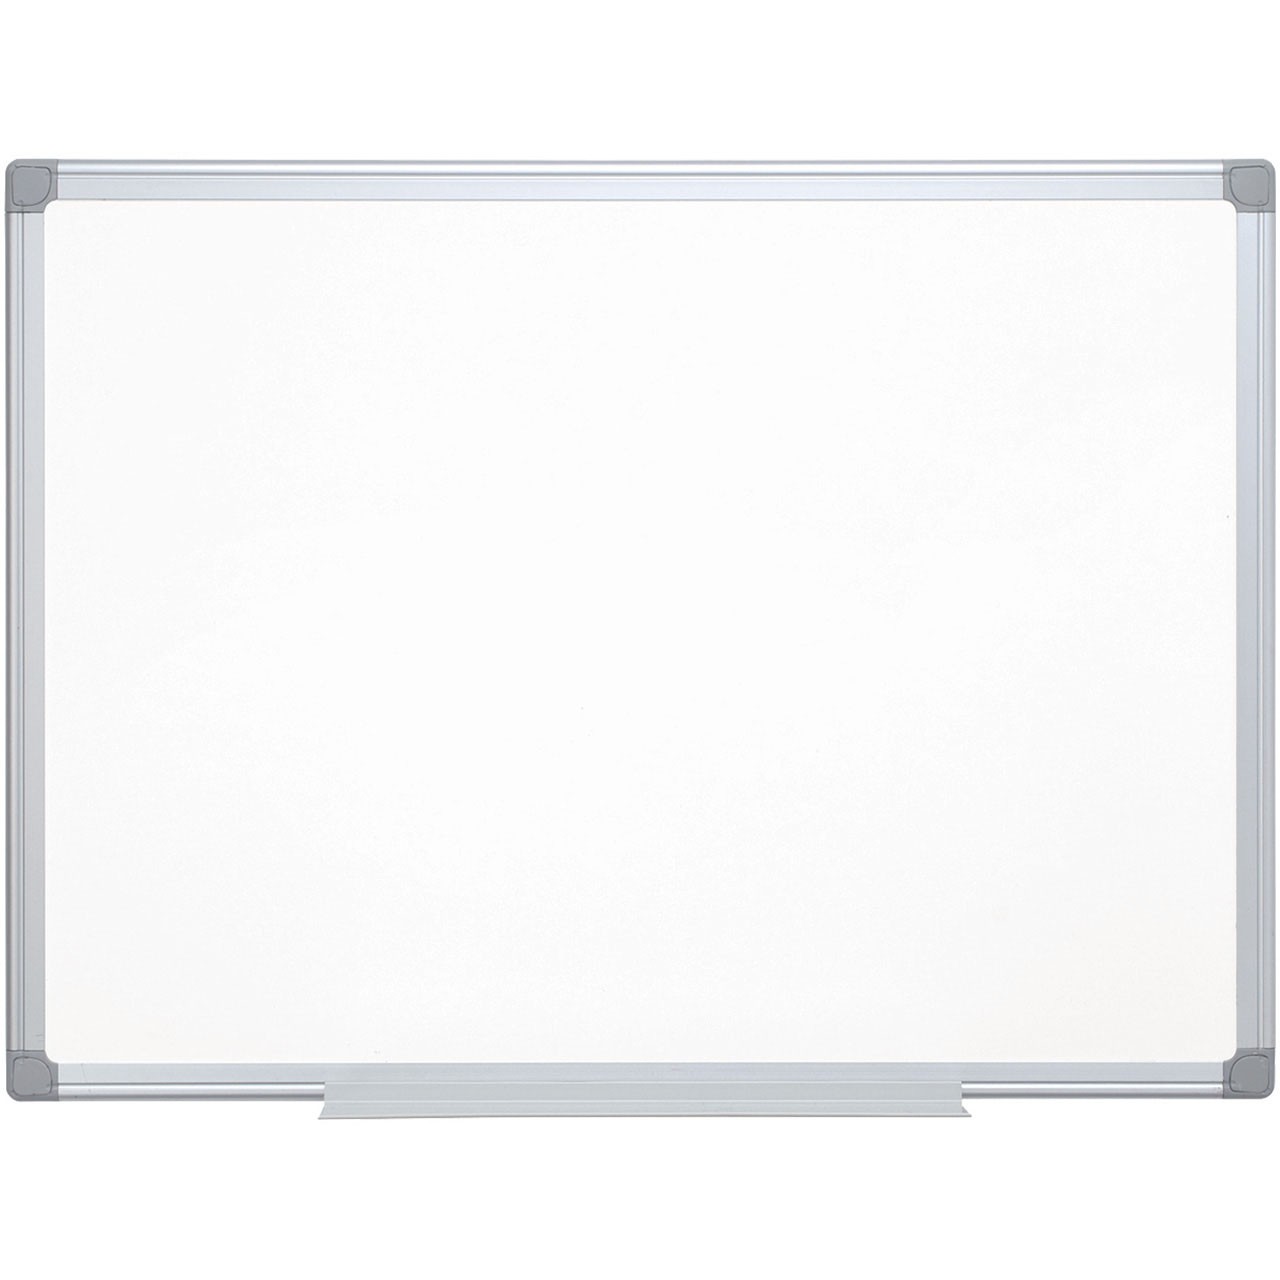 Q-connect emaljeret whiteboardtavle 180x120cm